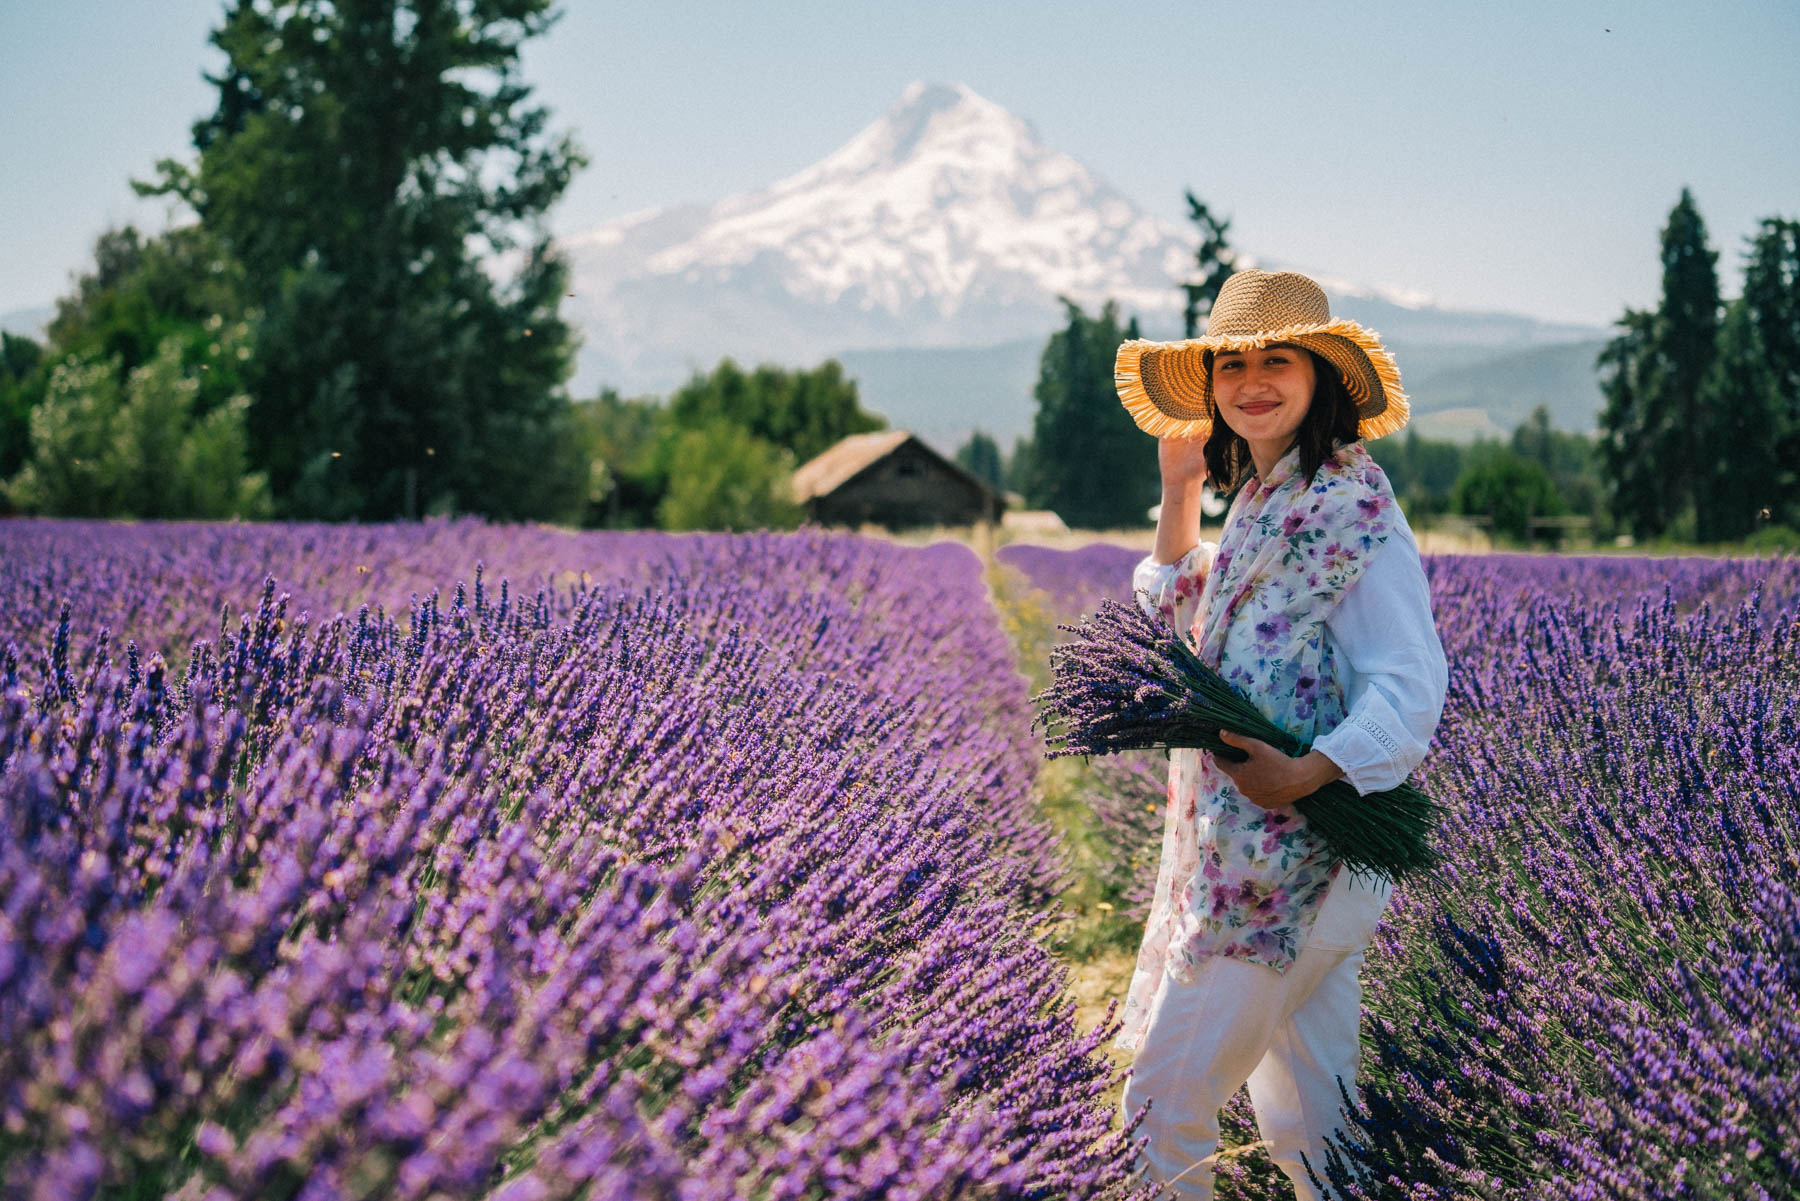  Lavender Valley Oregon
Best lavender fields in Oregon